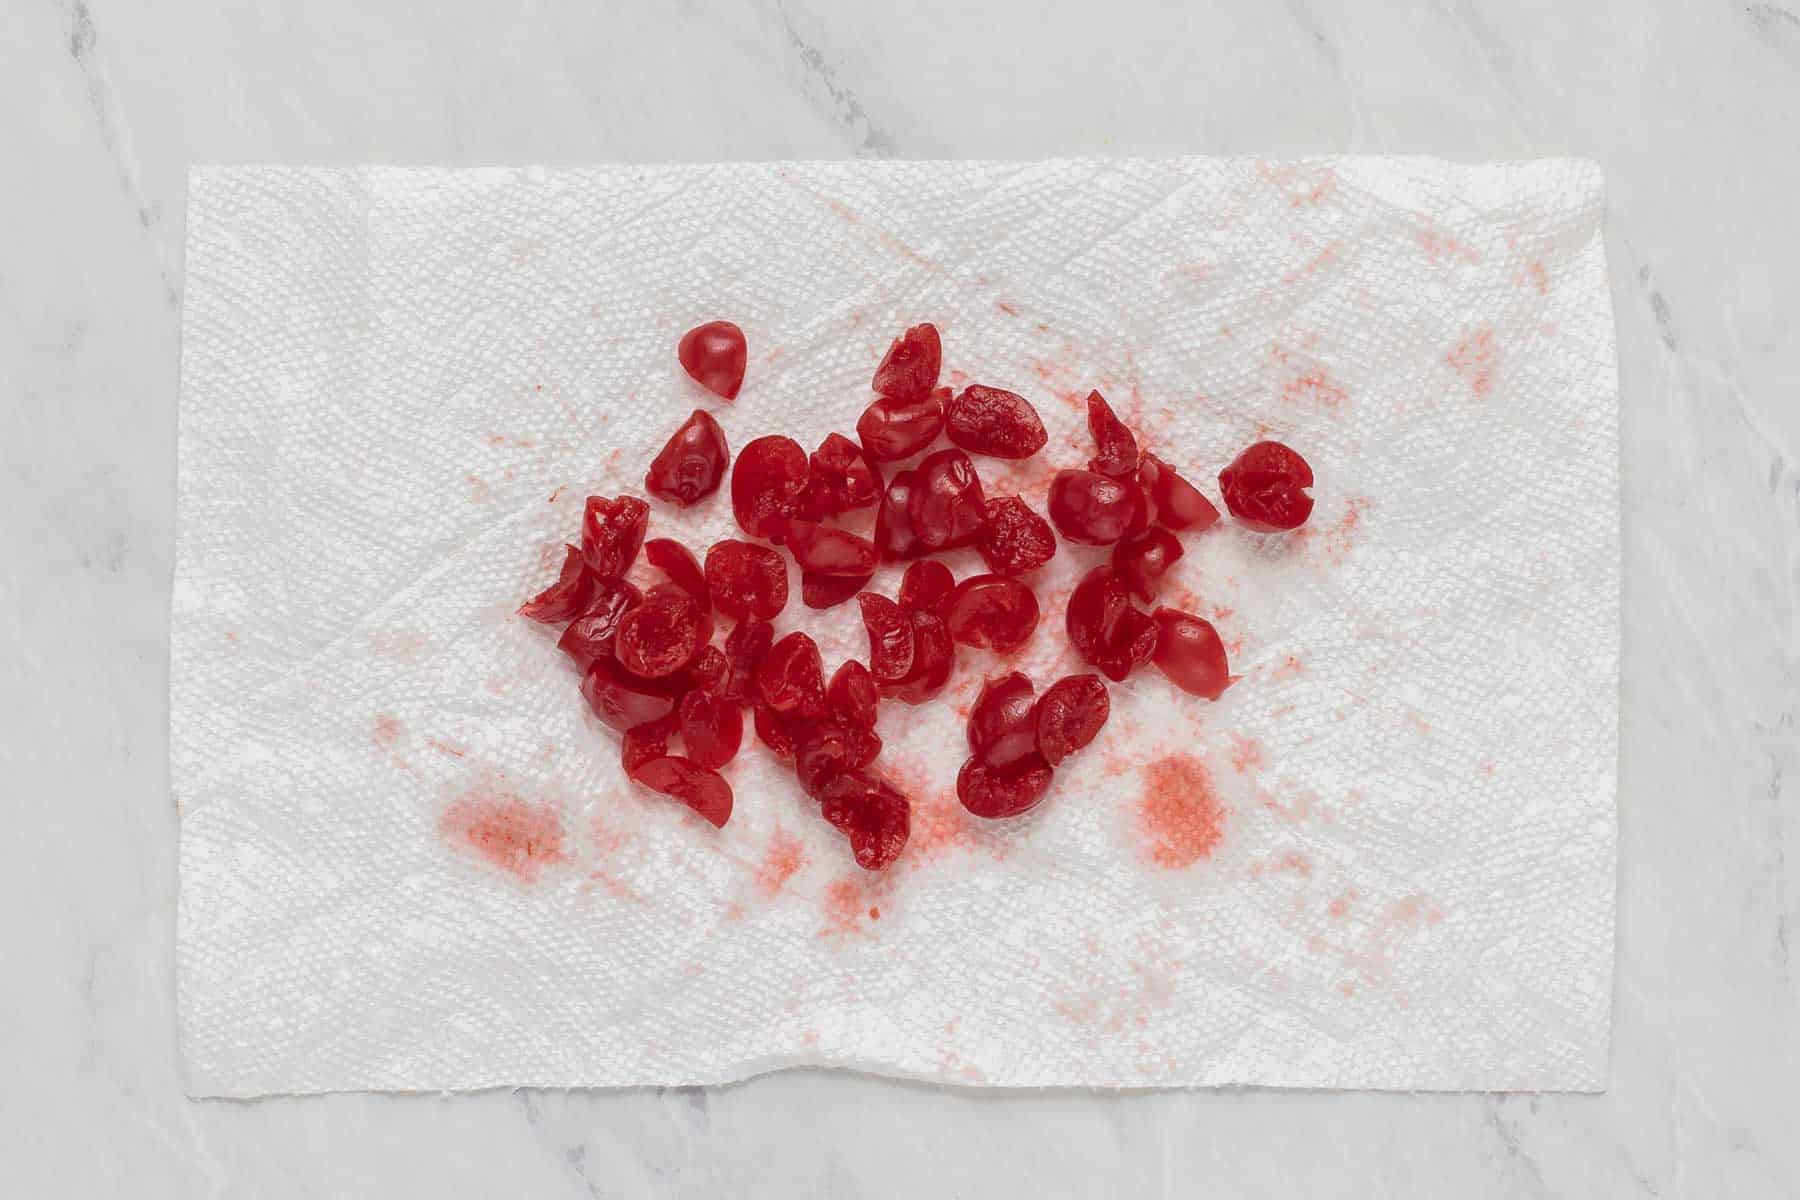 Chopped maraschino cherries on a paper towel.